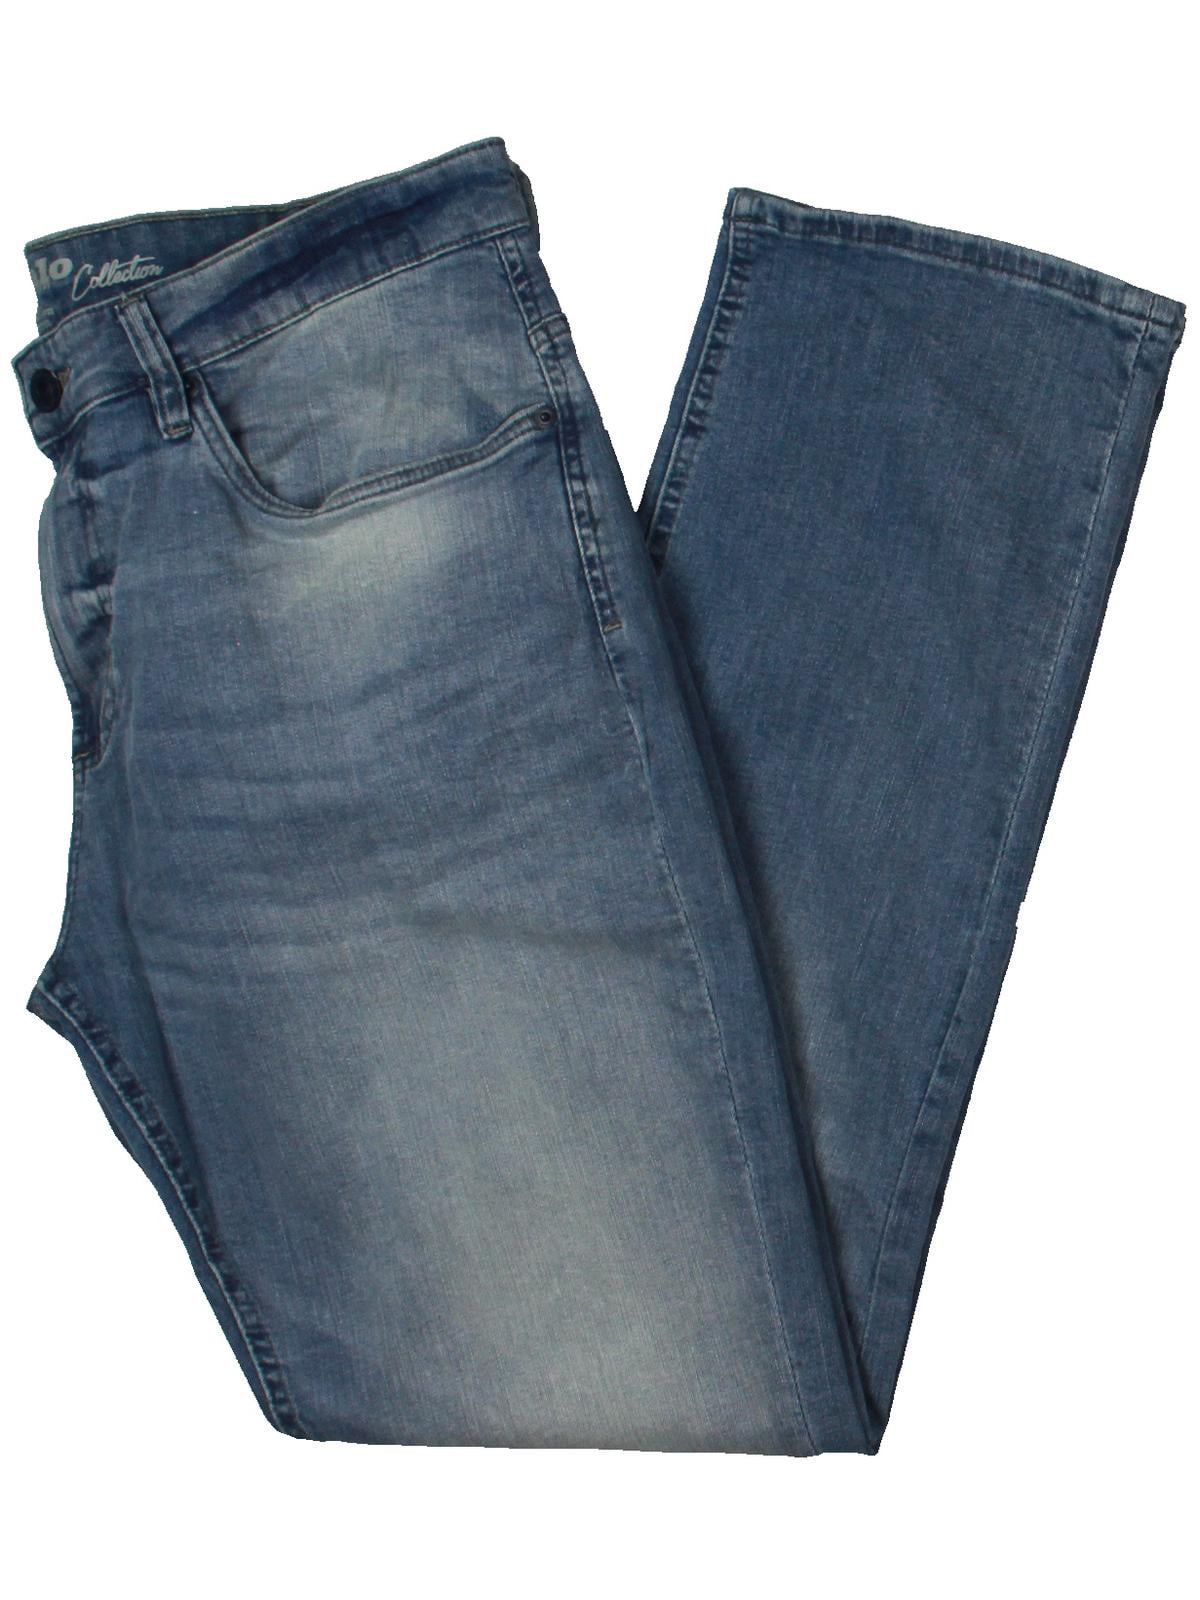 Buffalo Jeans Mens Denim Faded Straight Leg Jeans - Walmart.com